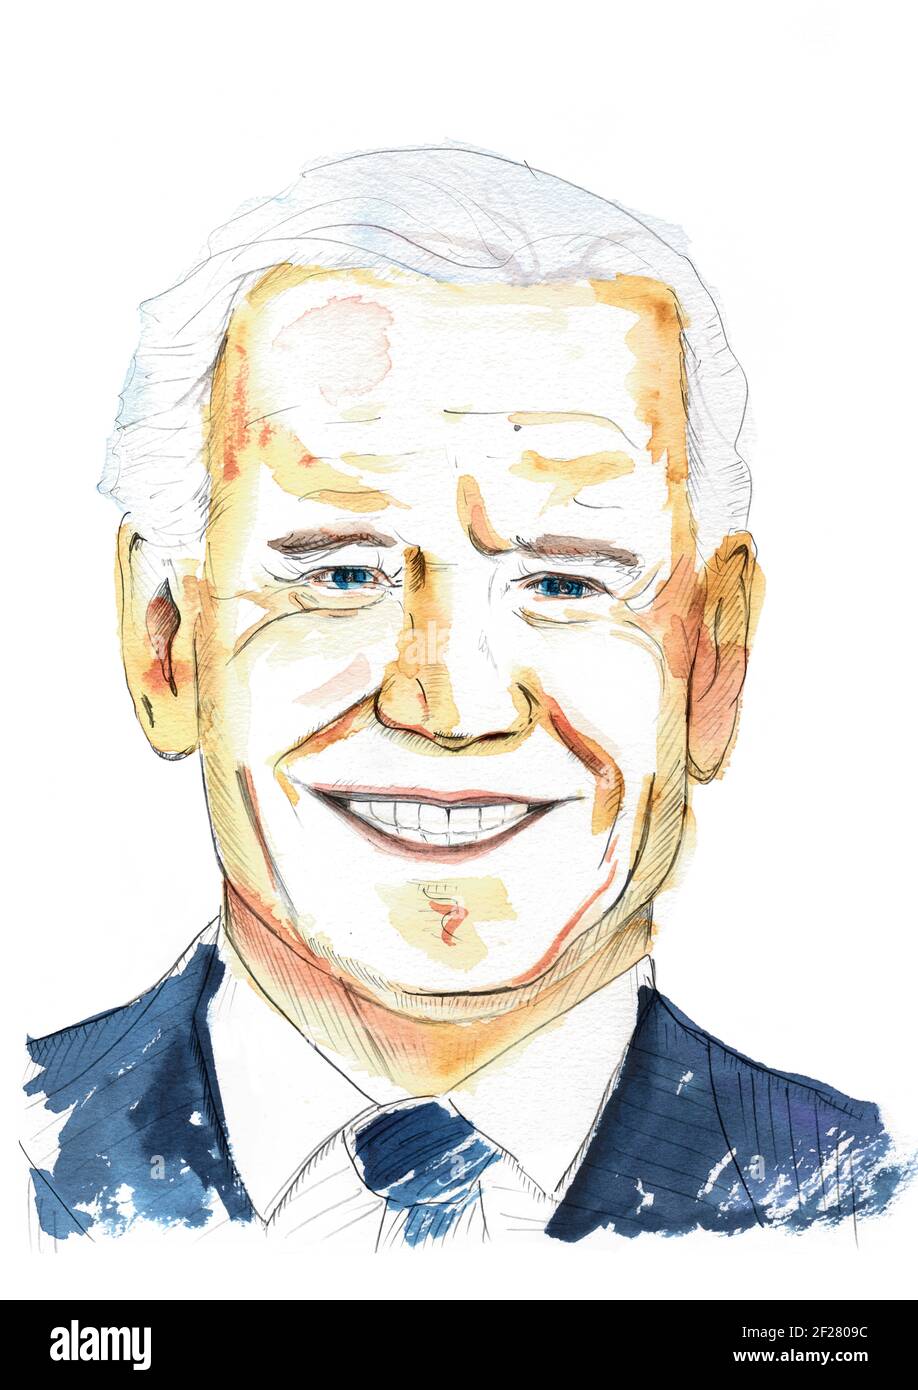 Madrid, Spain - December 8, 2020: a watercolour and pencil portrait of Joe Biden, American president Stock Photo